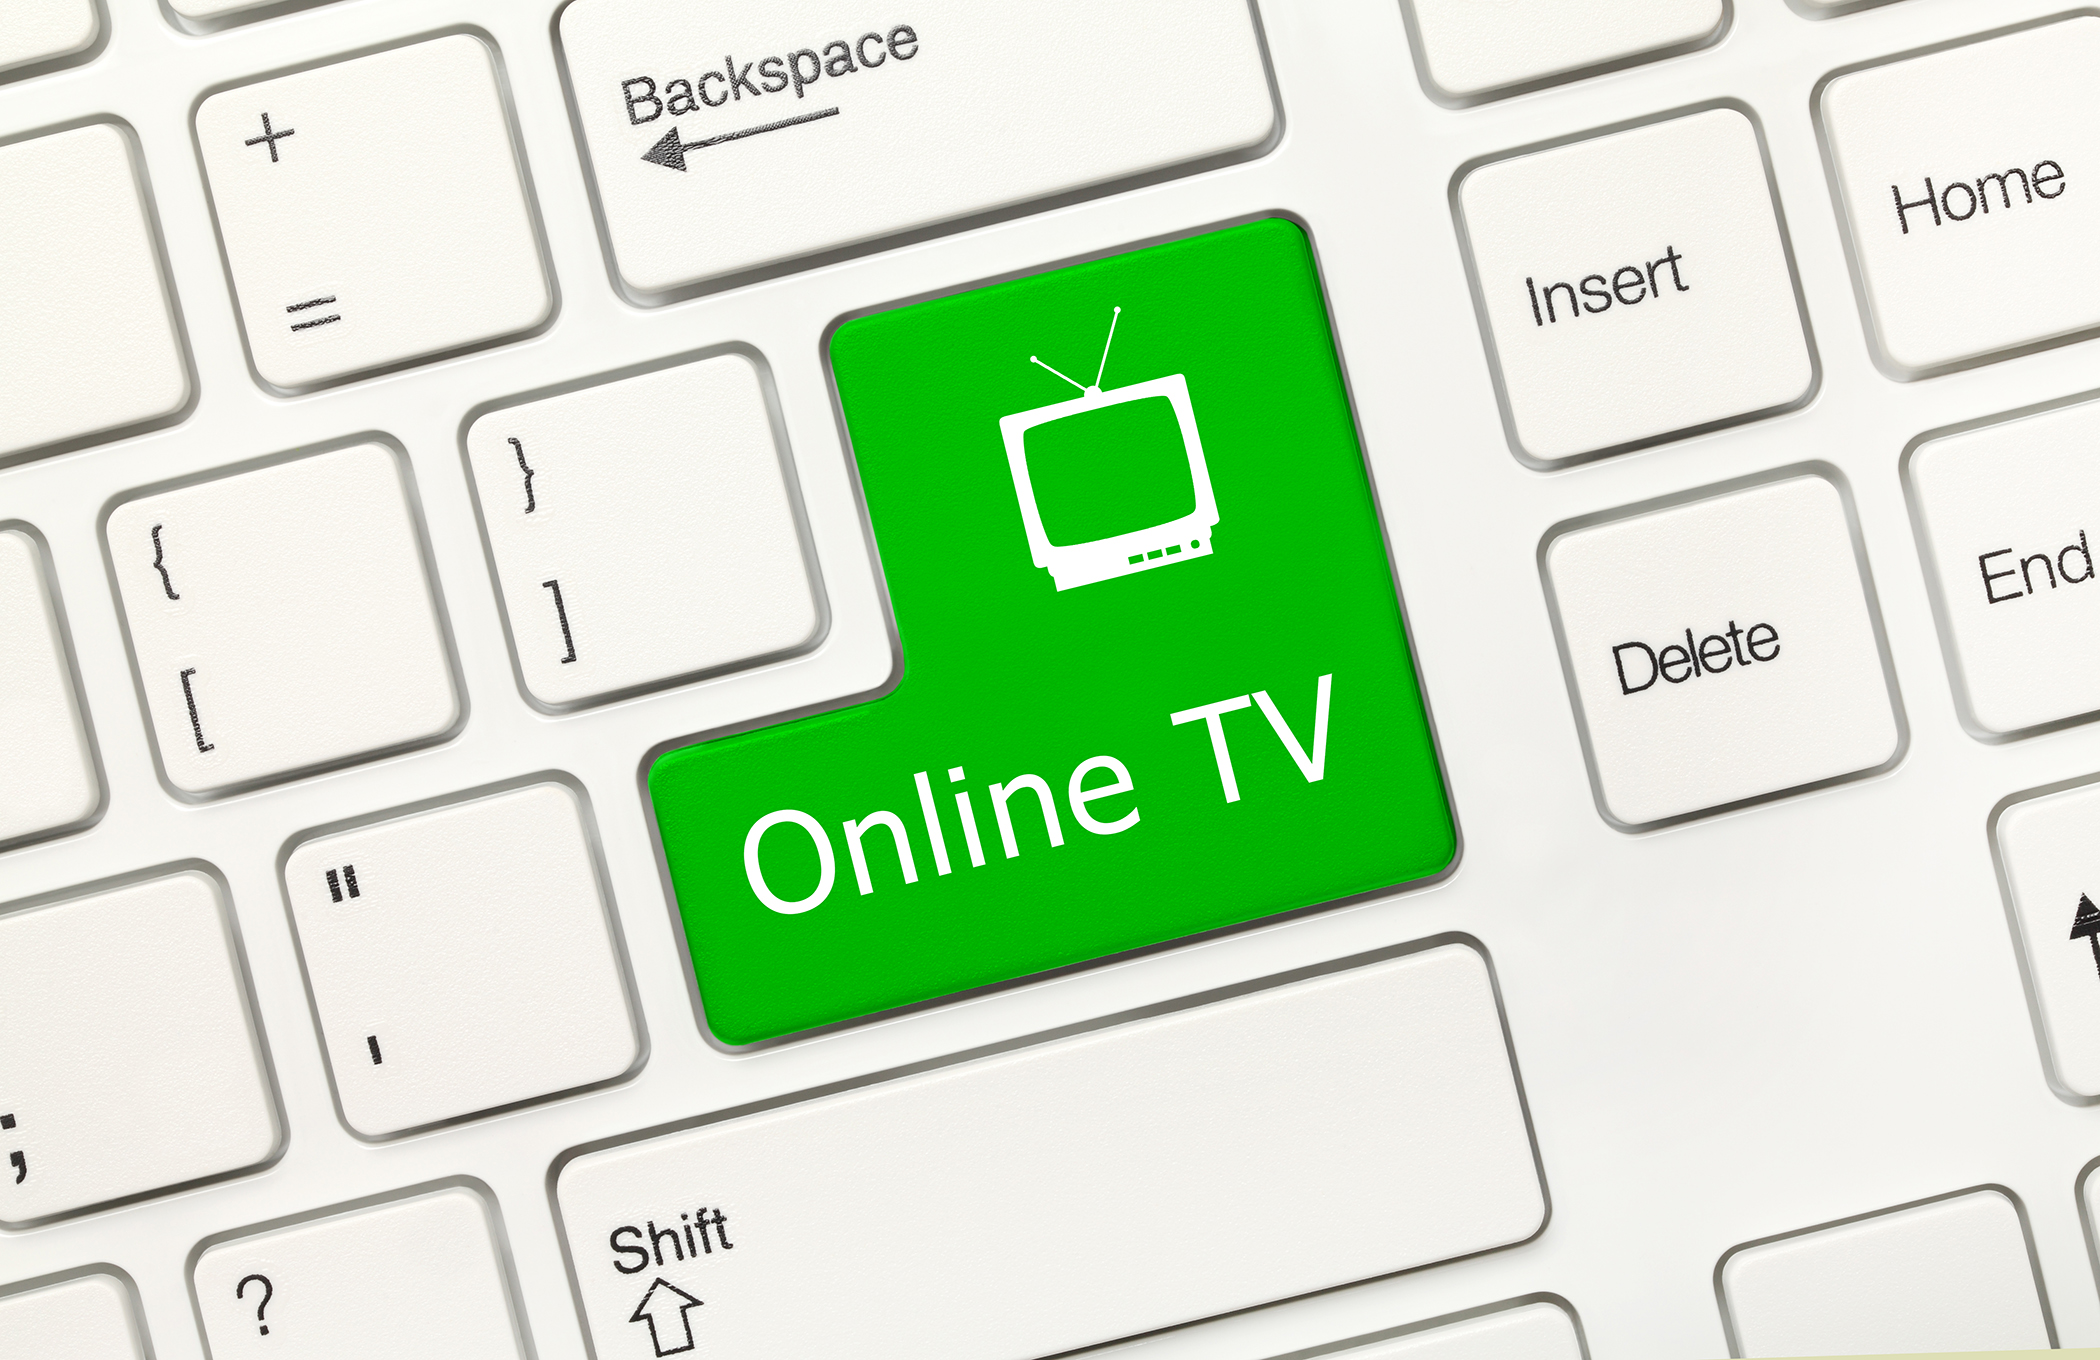 White conceptual keyboard - Online TV (green key)